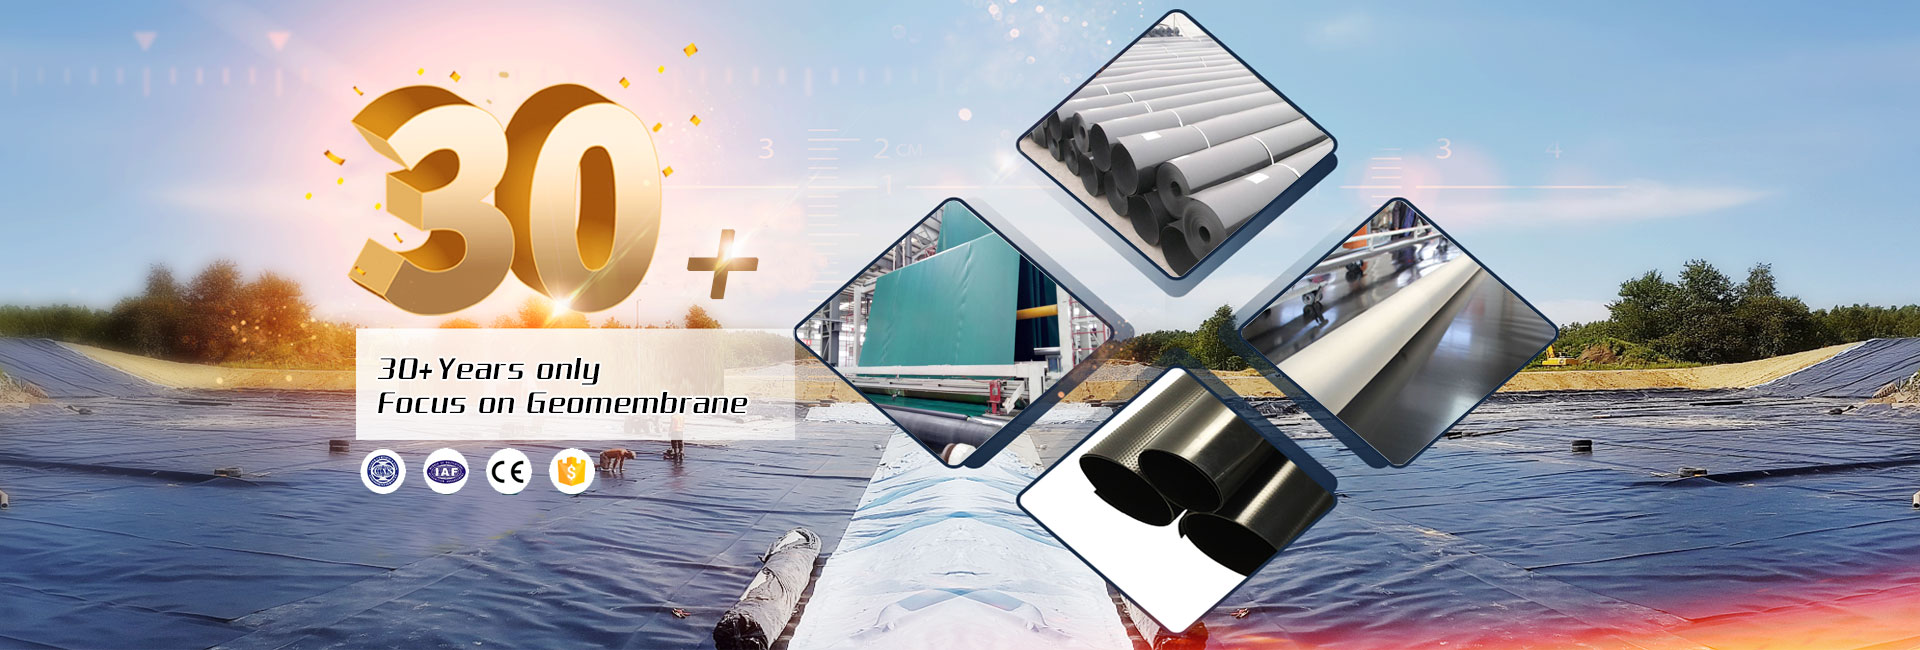 Geomembrane,Pond liner,HDPE geomembrane, HDPE pond liner, 